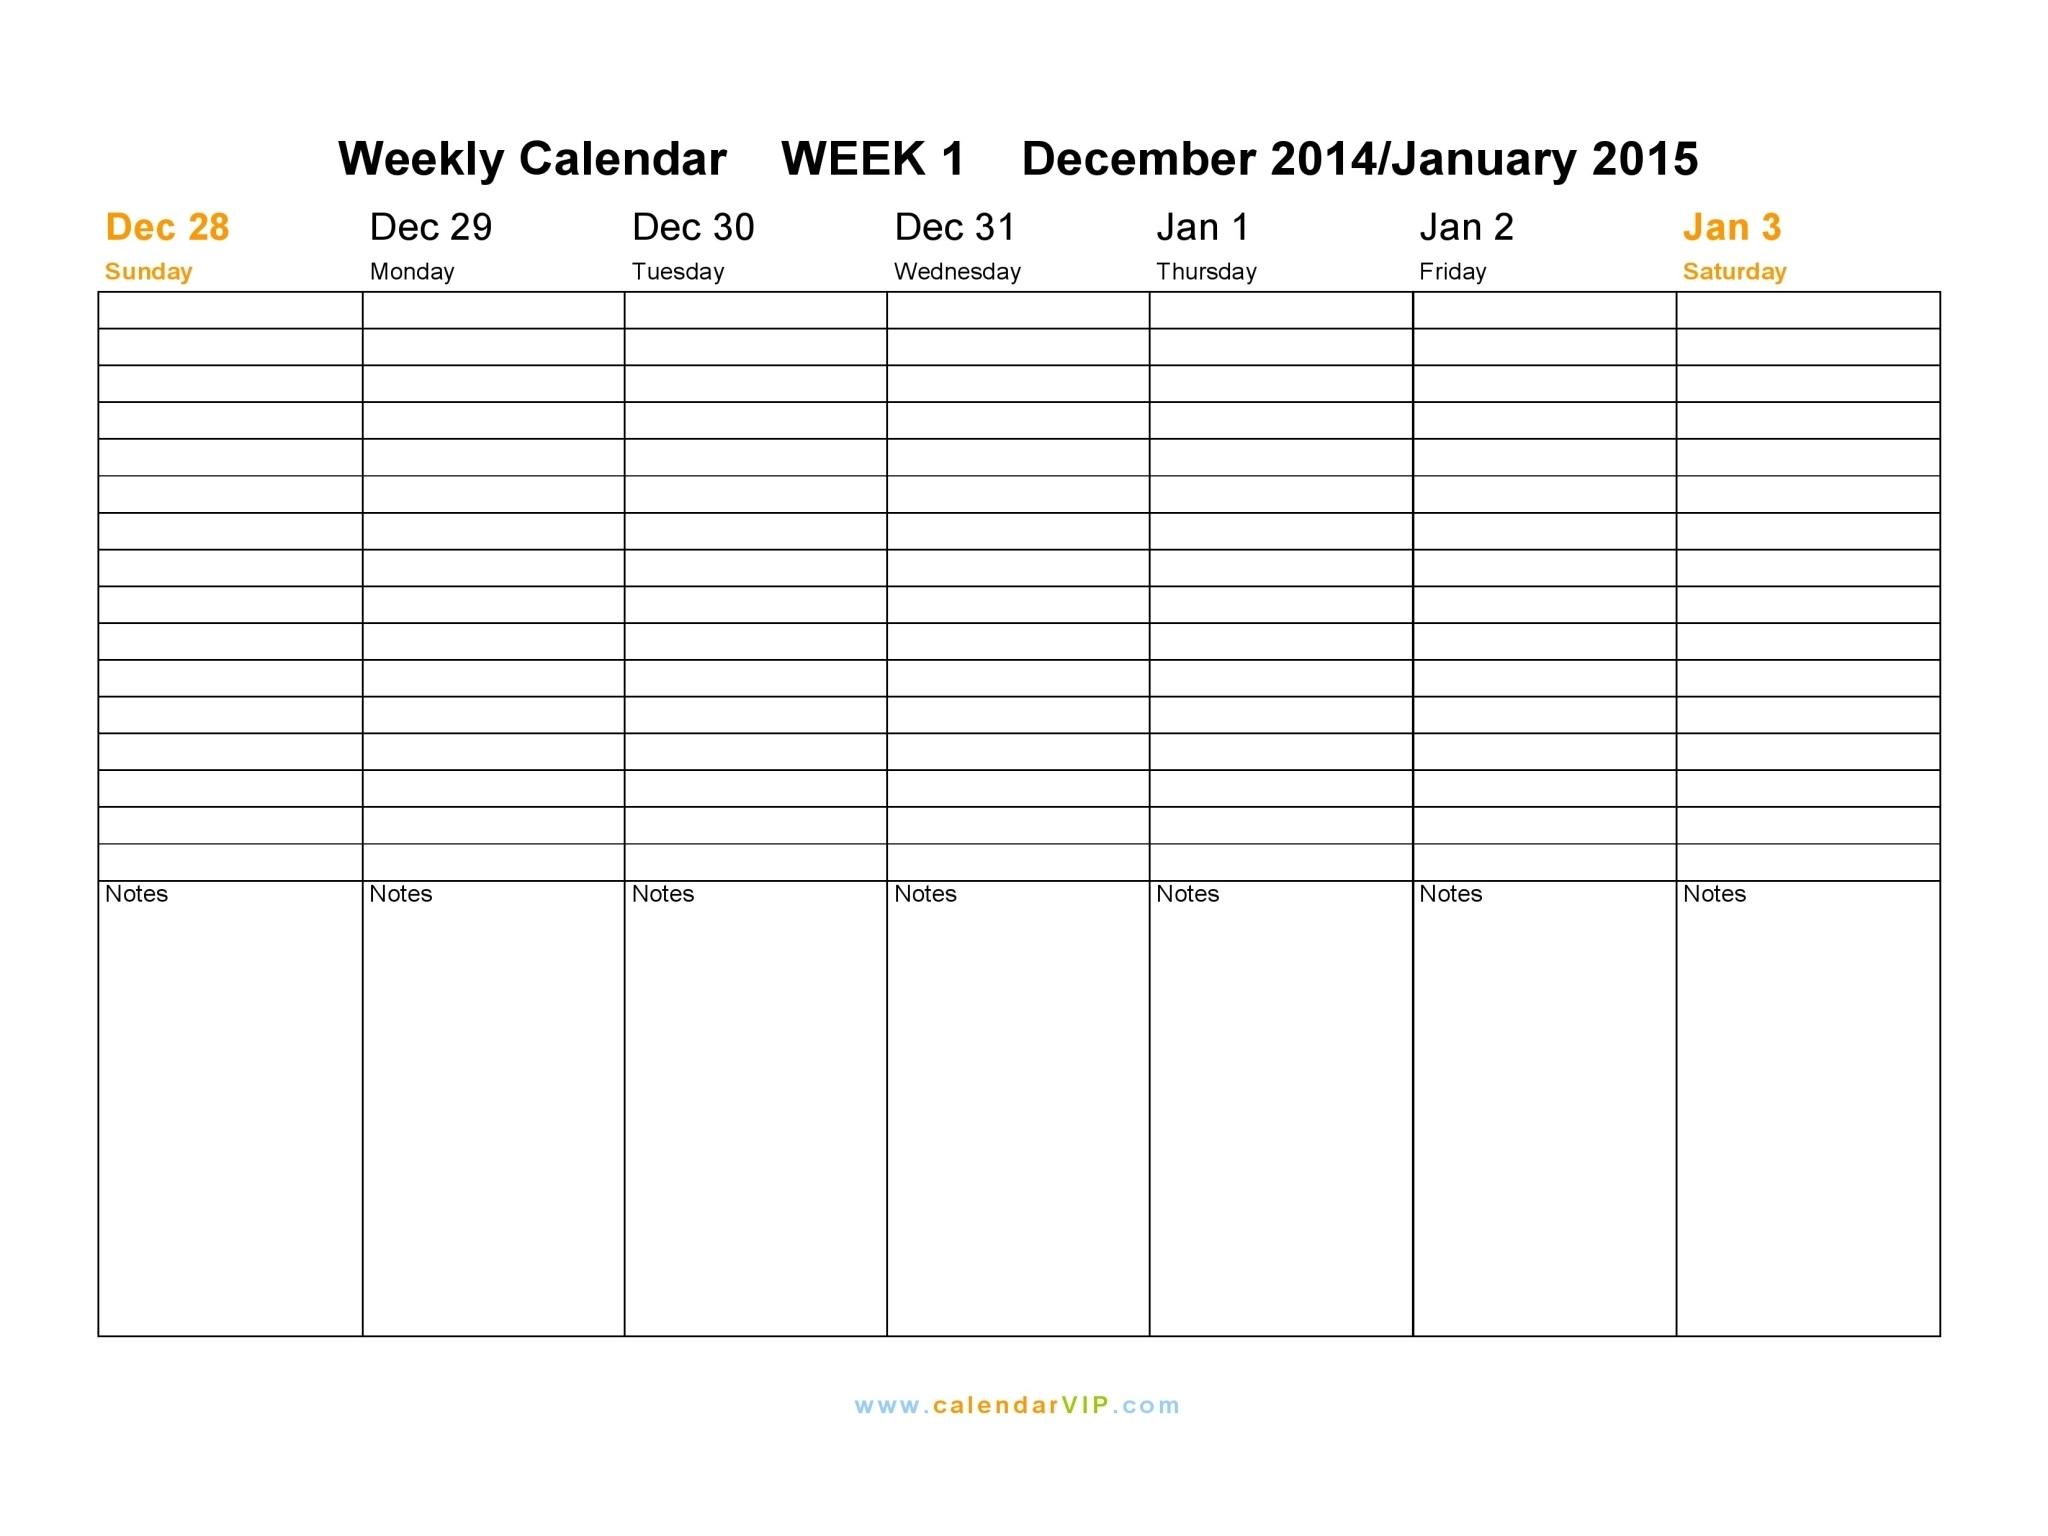 Weekly Calendar 2015 - Free Weekly Calendar Templates